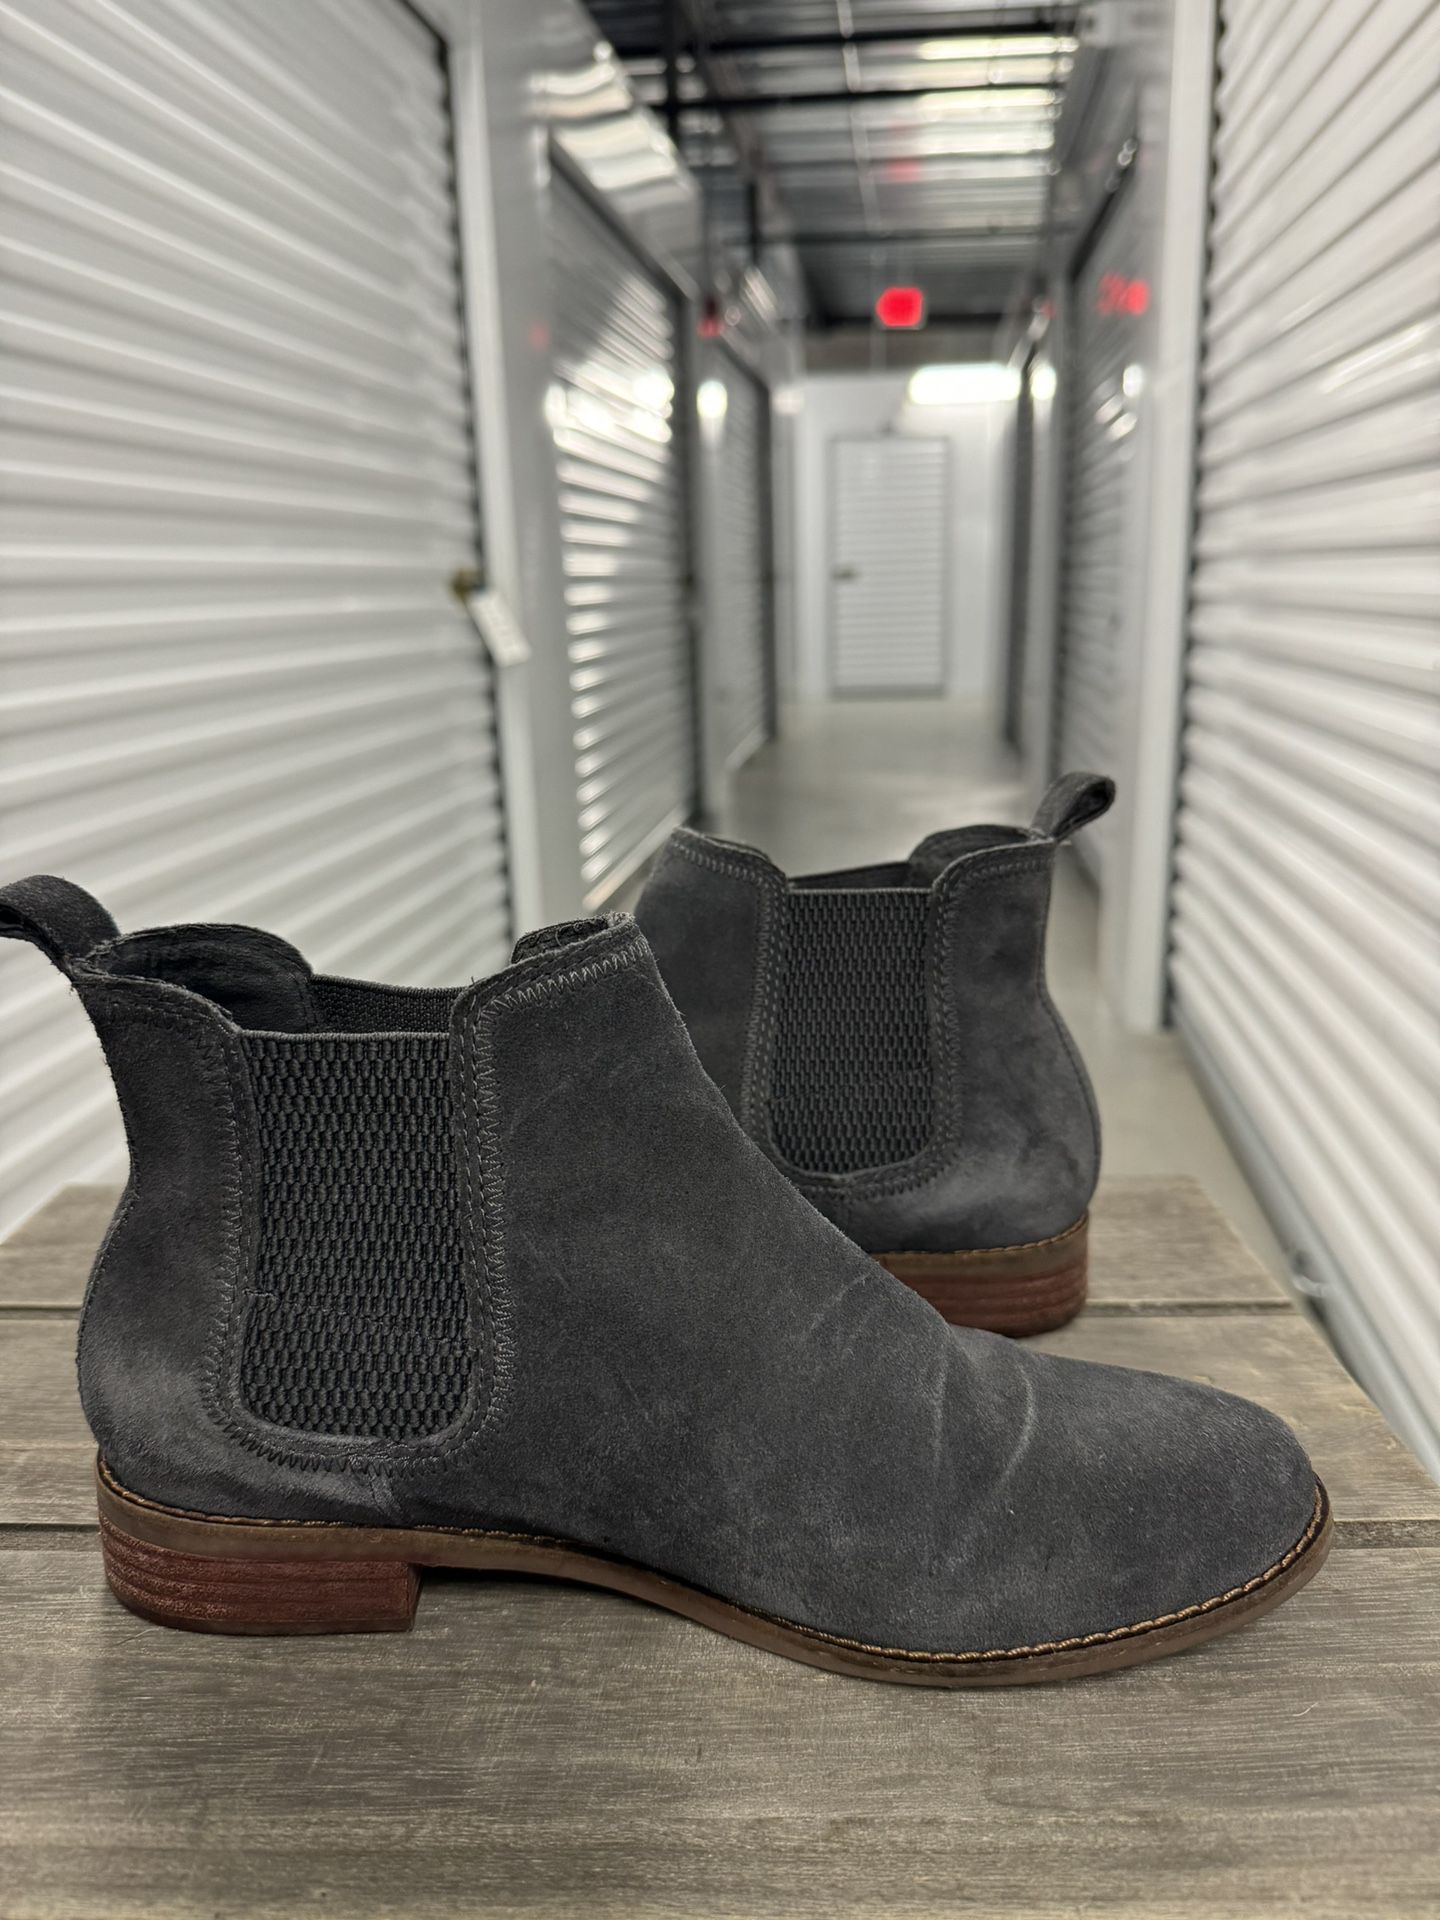 Toms Black/Grey Boots